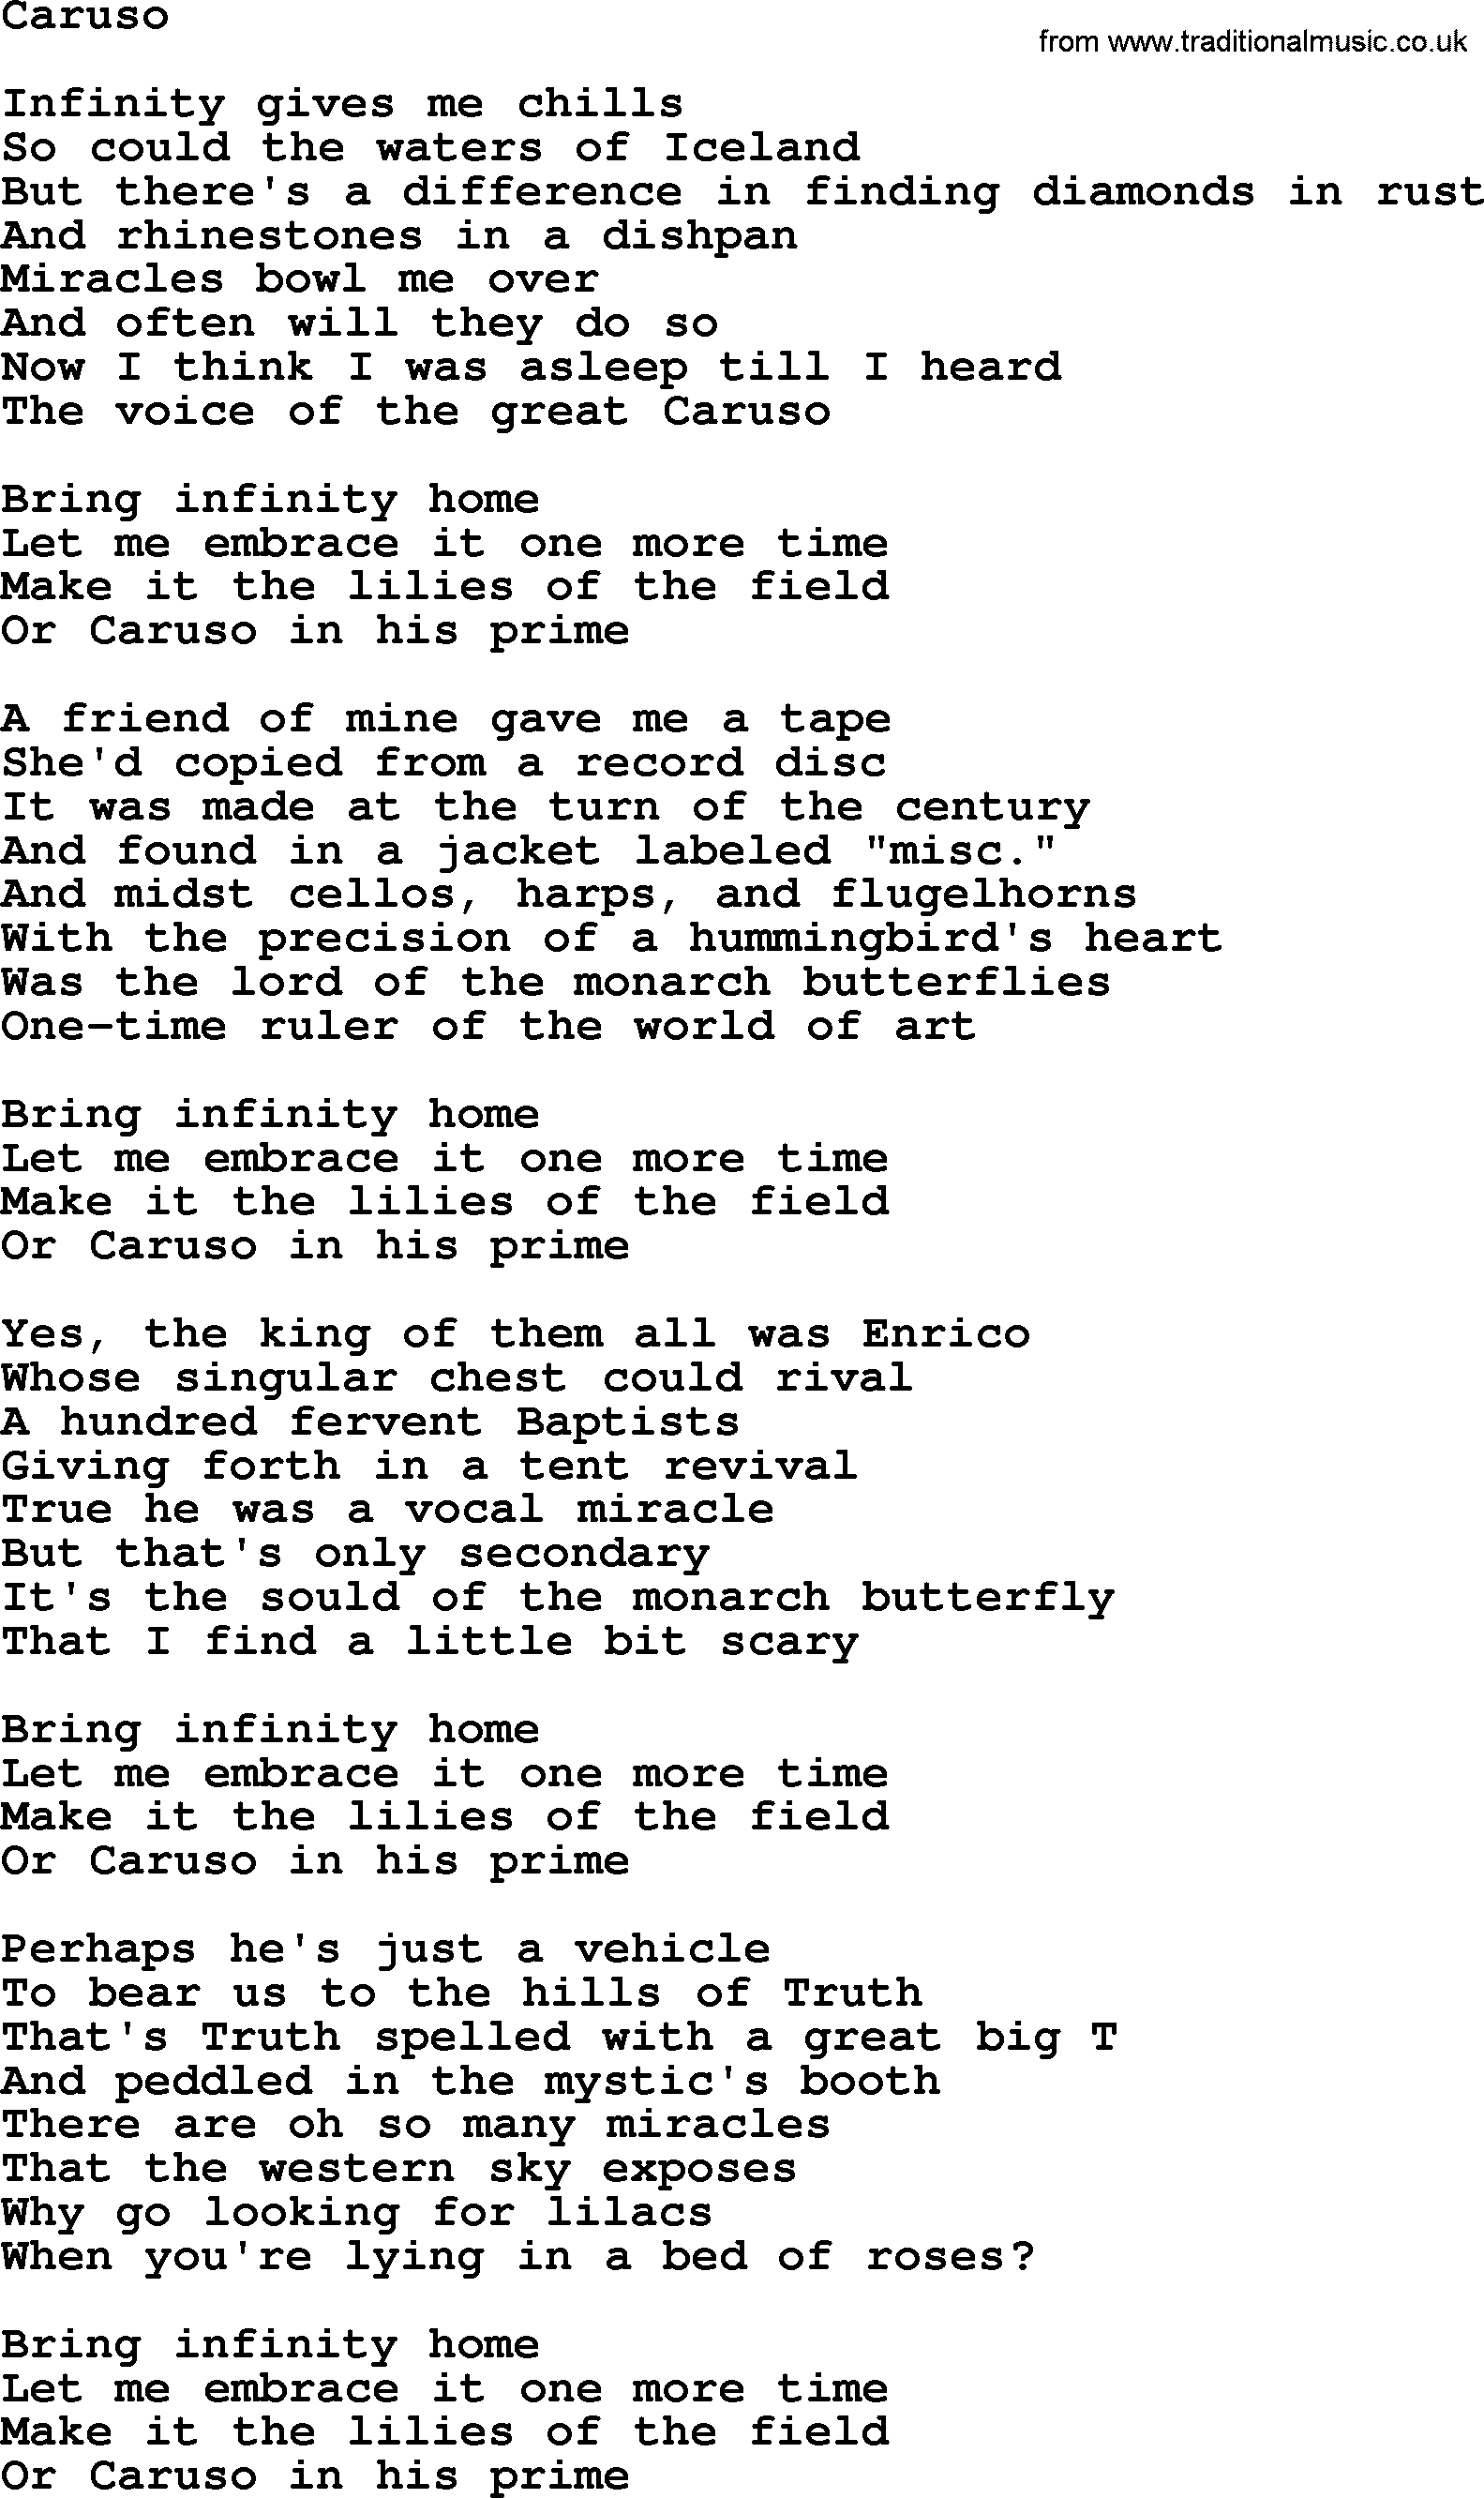 Joan Baez song Caruso, lyrics